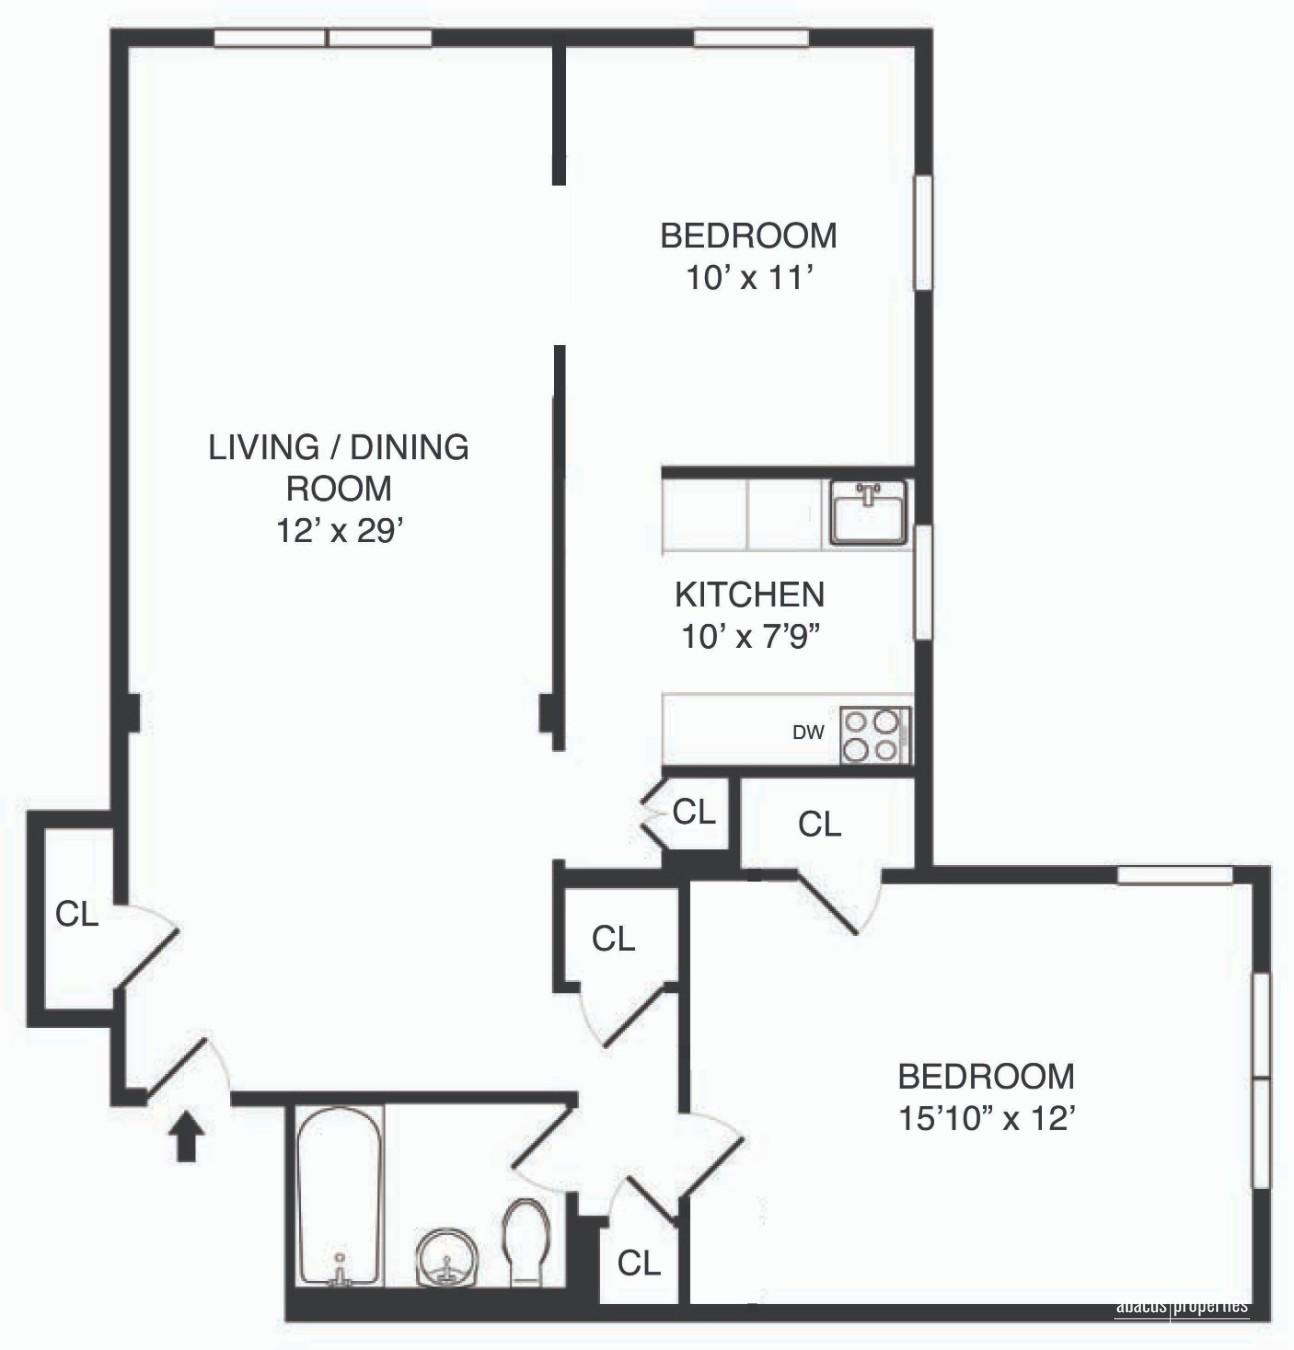 Floorplan for 2711 Ave X, 2B